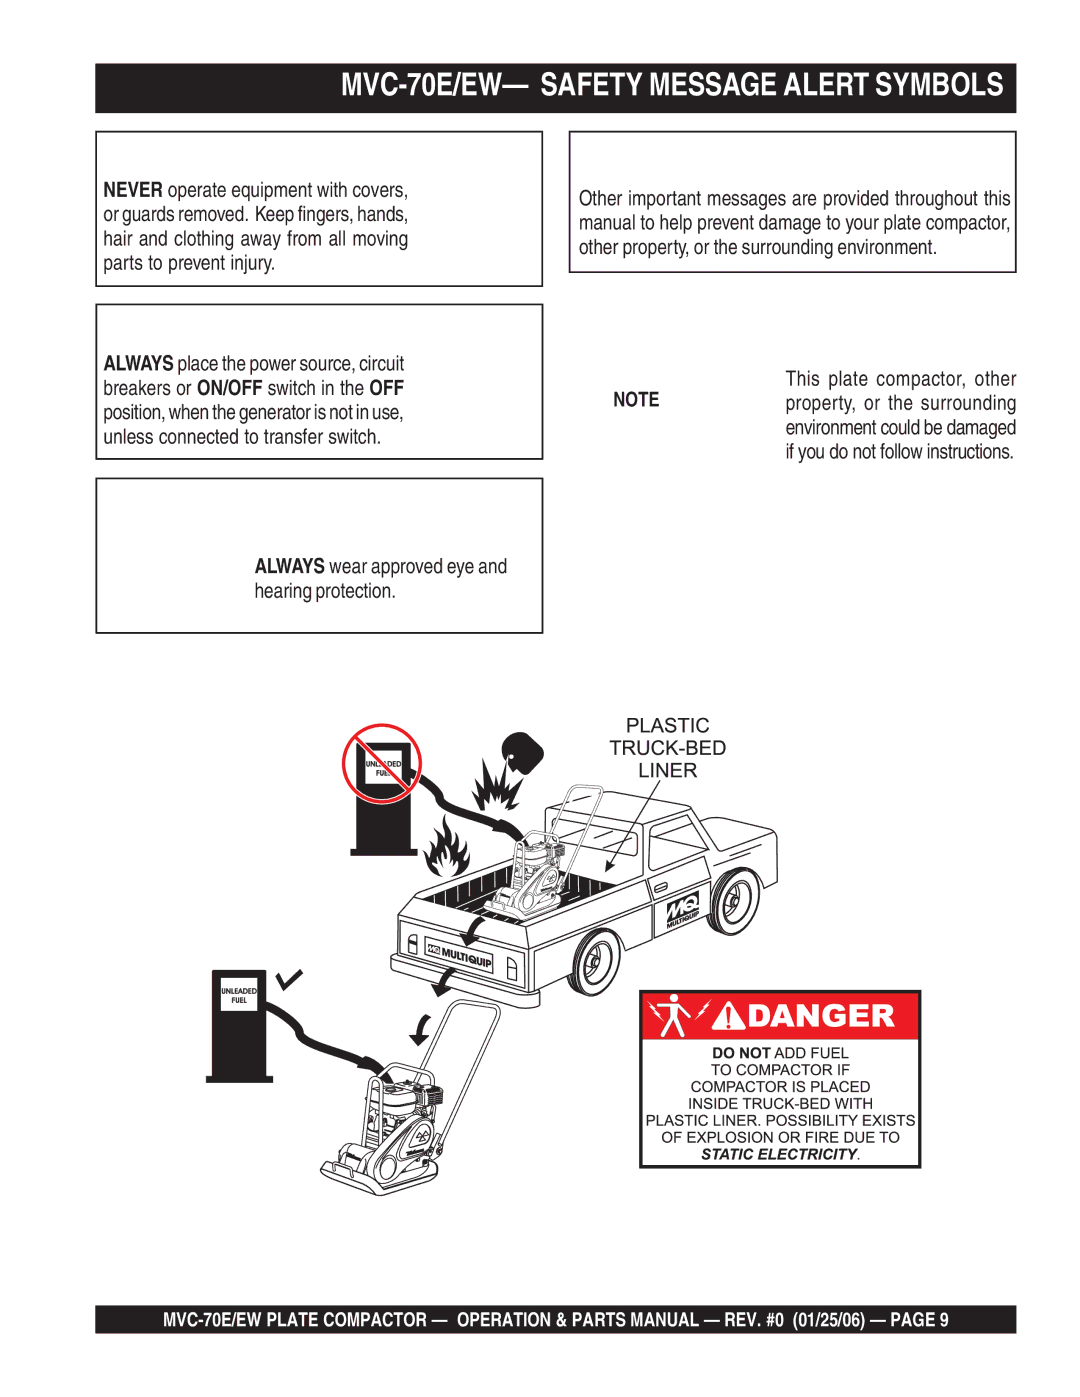 Multiquip manual MVC-70E/EW- Safety Message Alert Symbols 